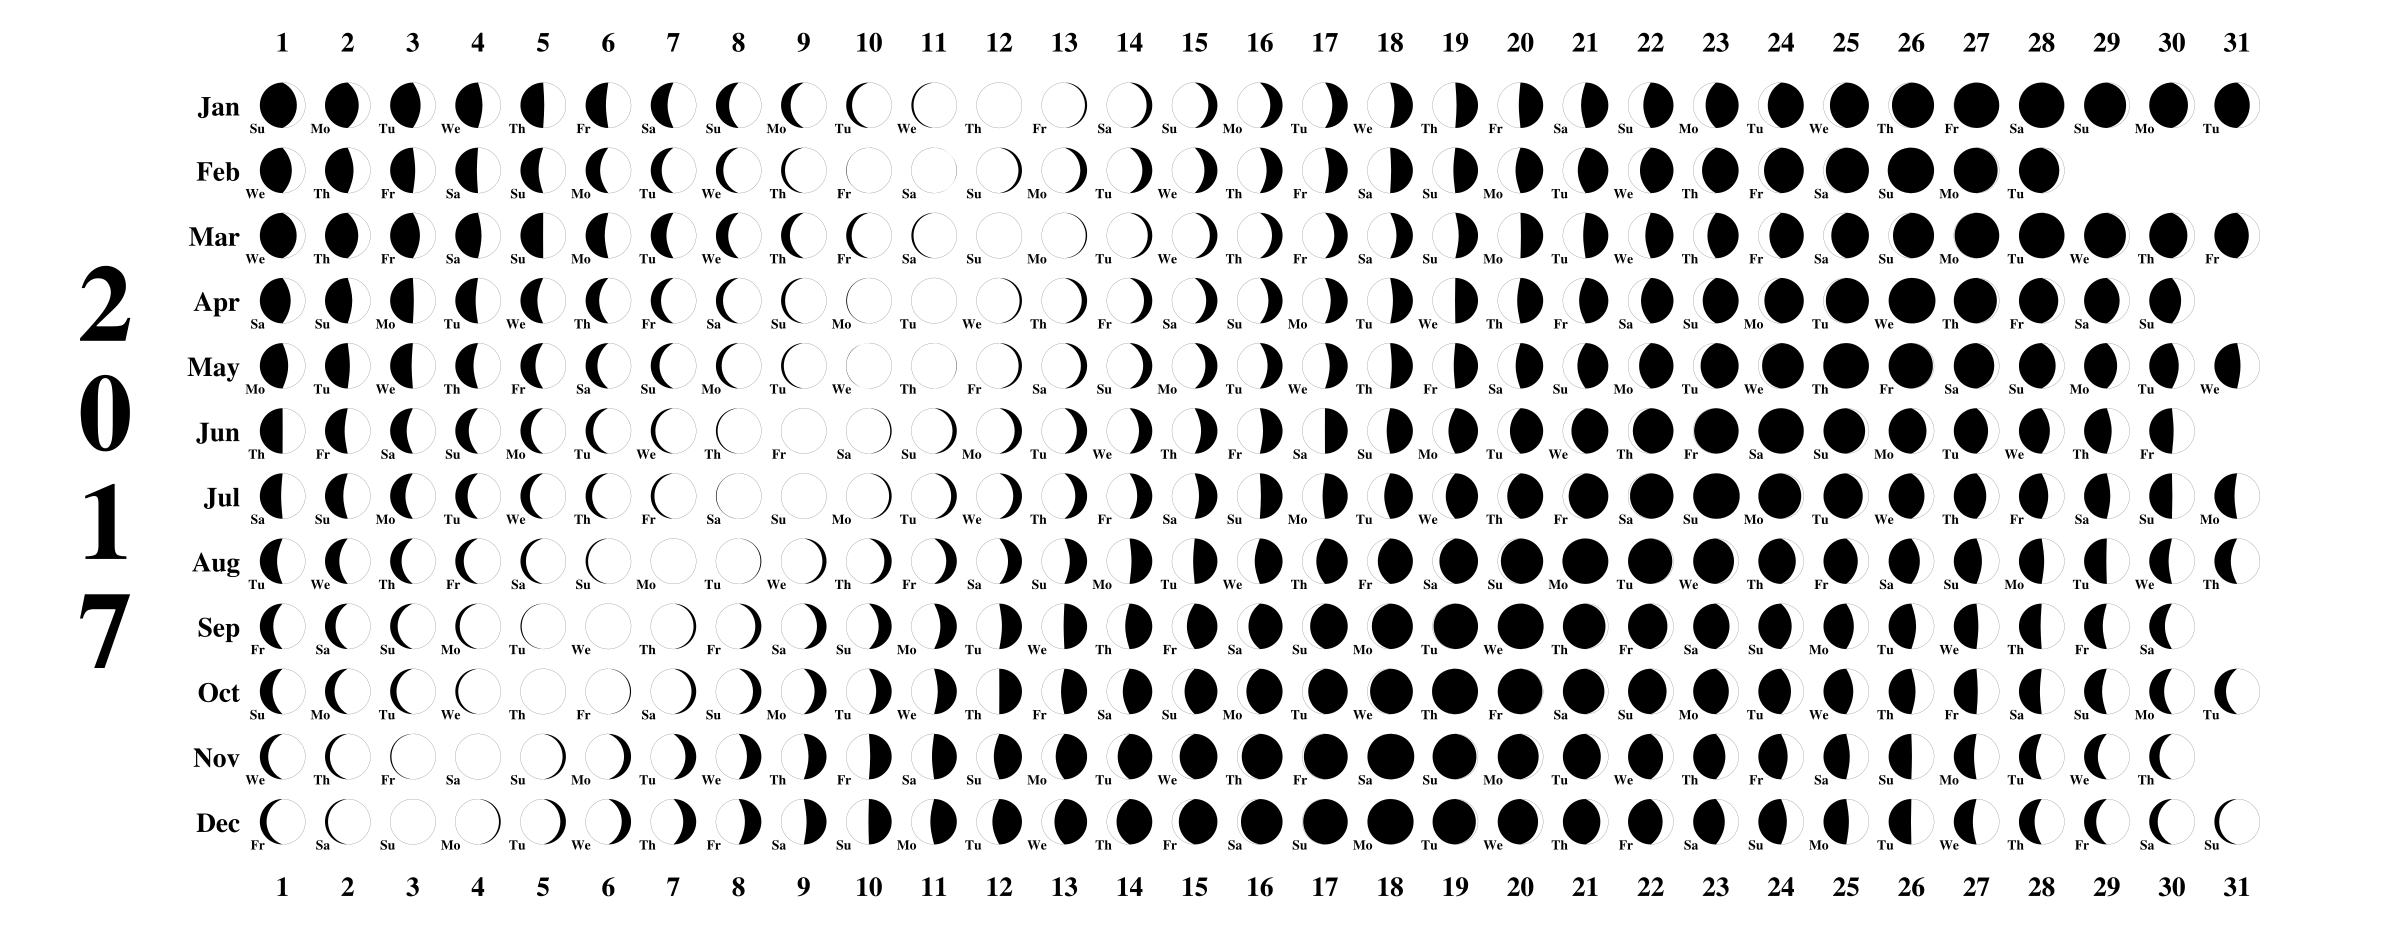 moon-calendar-keighley-astronomical-society